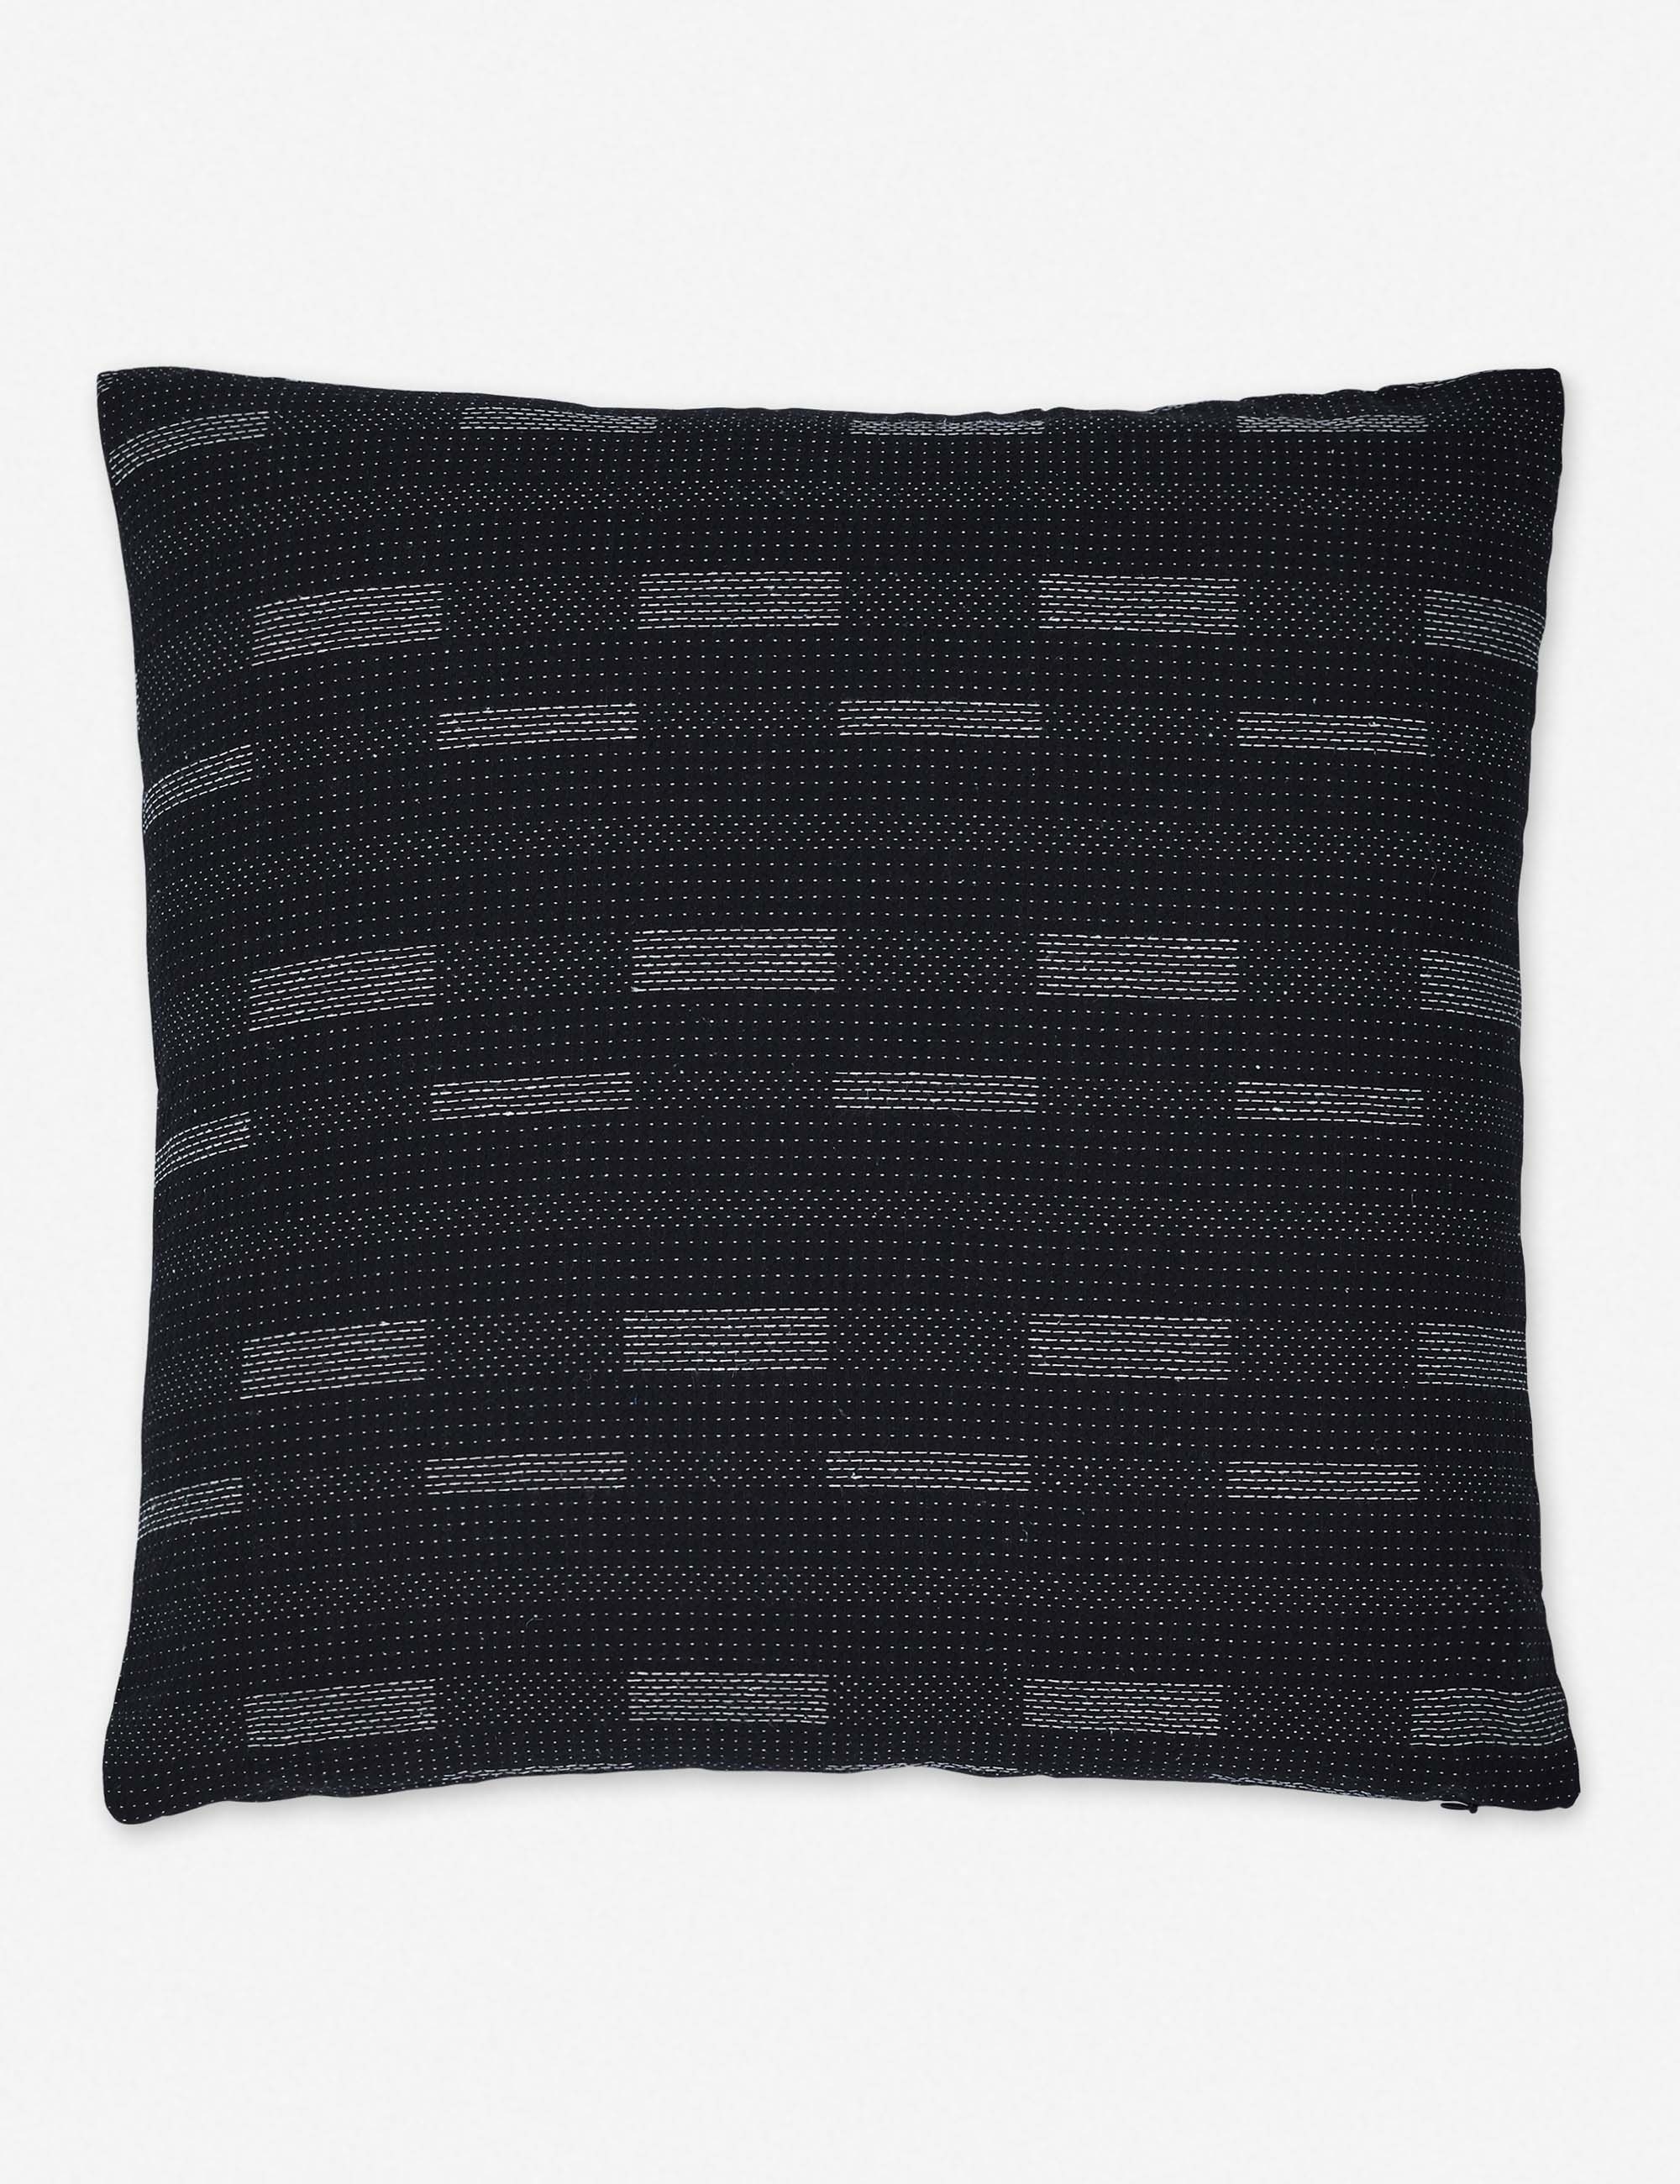 Kimora Pillow, Black, 18" x 18" - Image 0